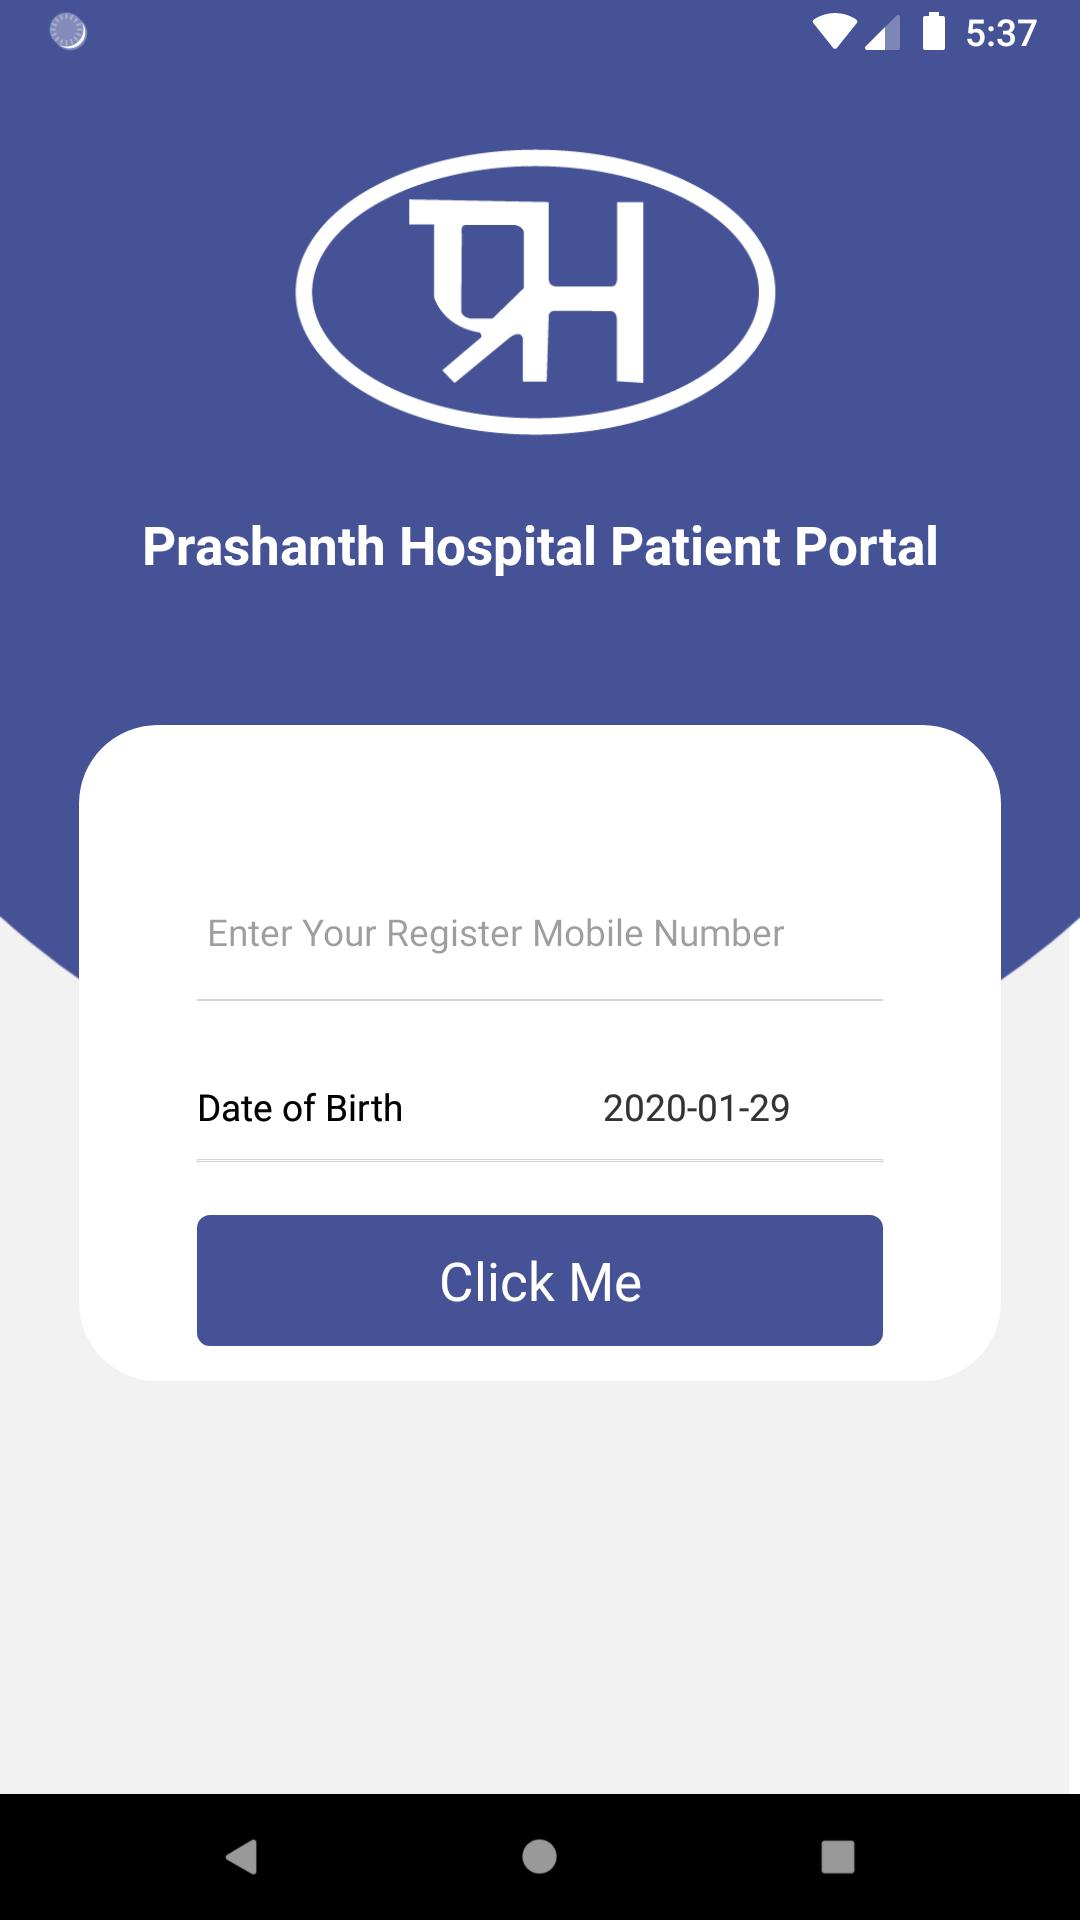 Prashant Hospital Patient Portal 1.1.1 Screenshot 2